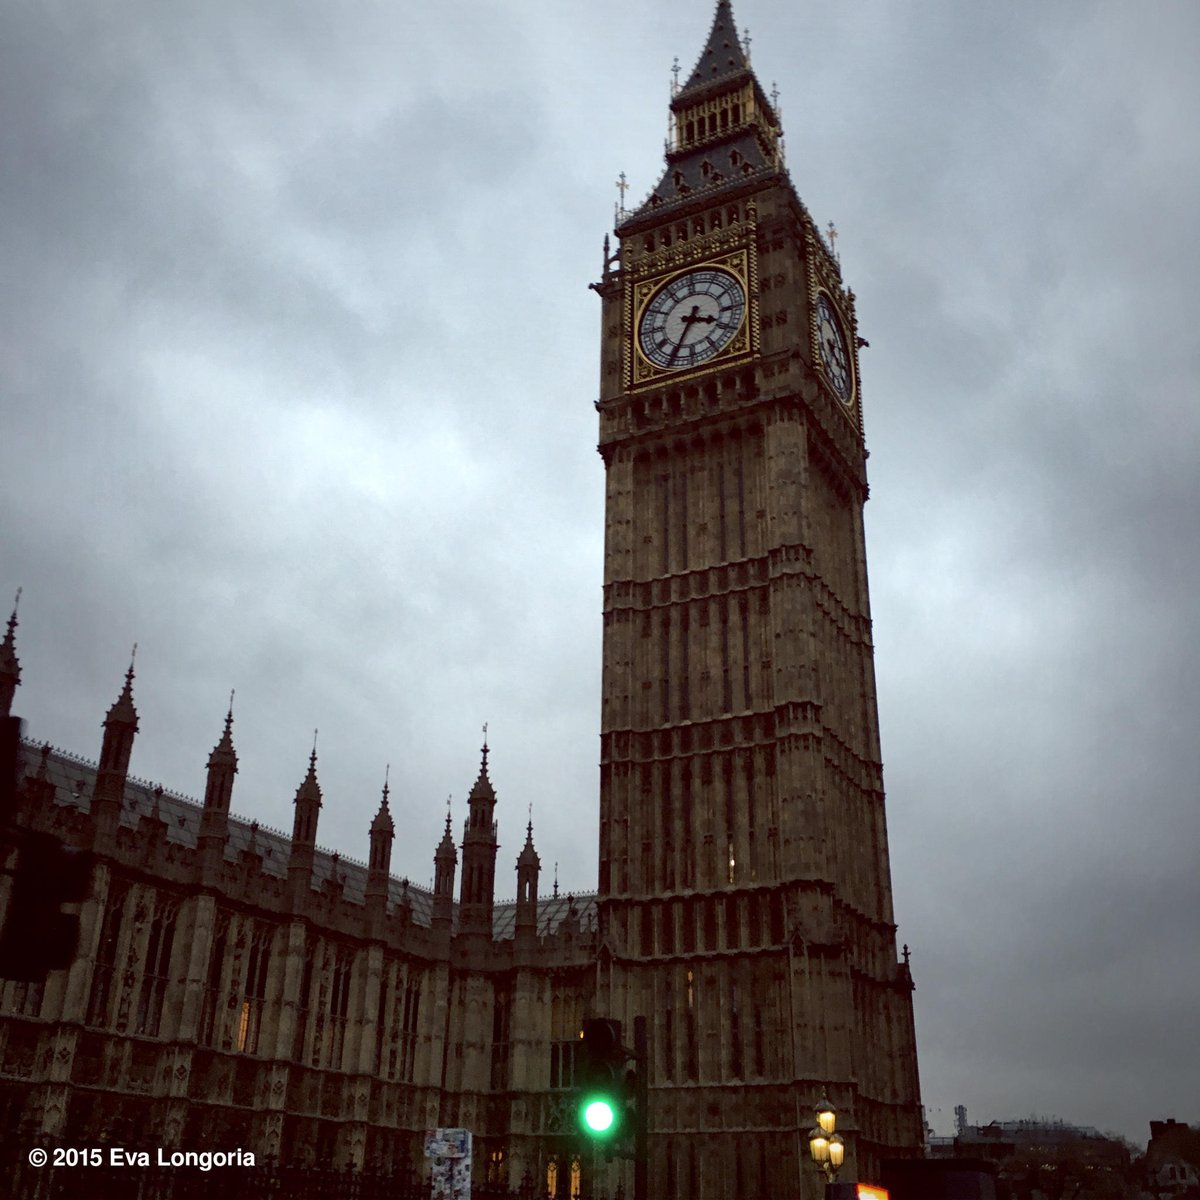 Lovely rainy weather in London! @GlobalGiftFound #BigBen #GGFLDN15 https://t.co/oAPbyBb8d3